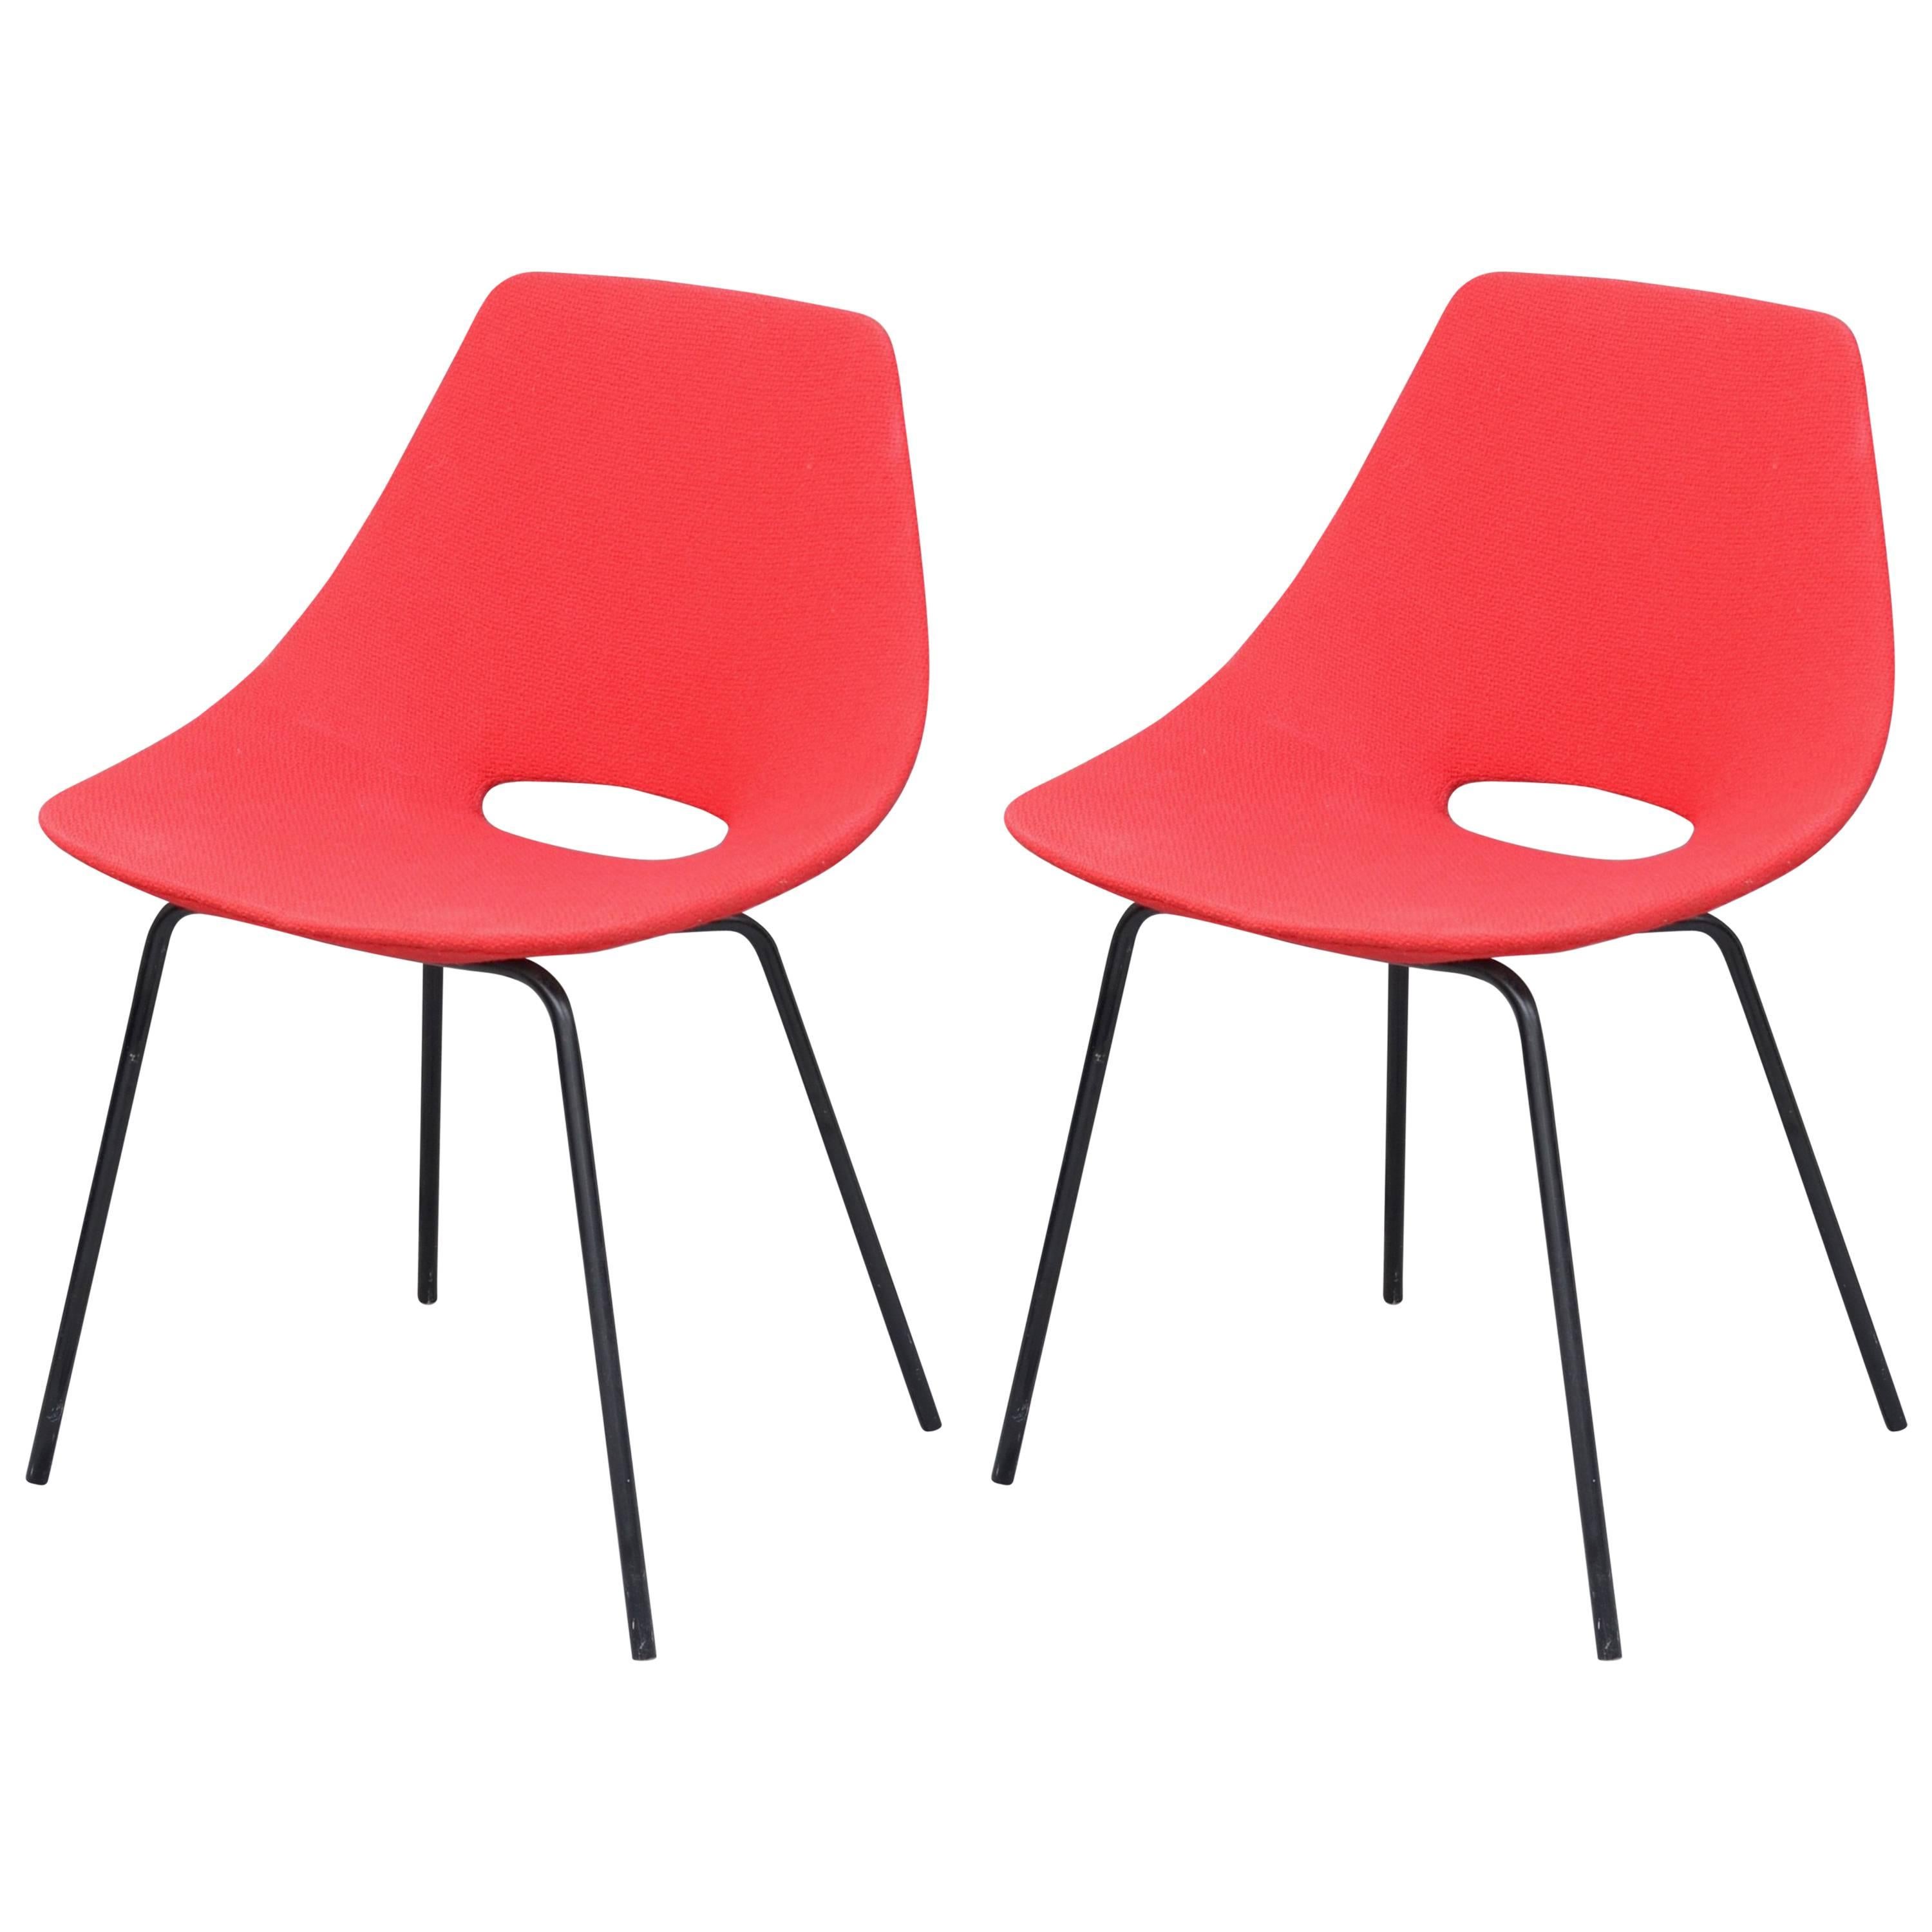 Pair of Tonneau Chairs by Pierre Guariche